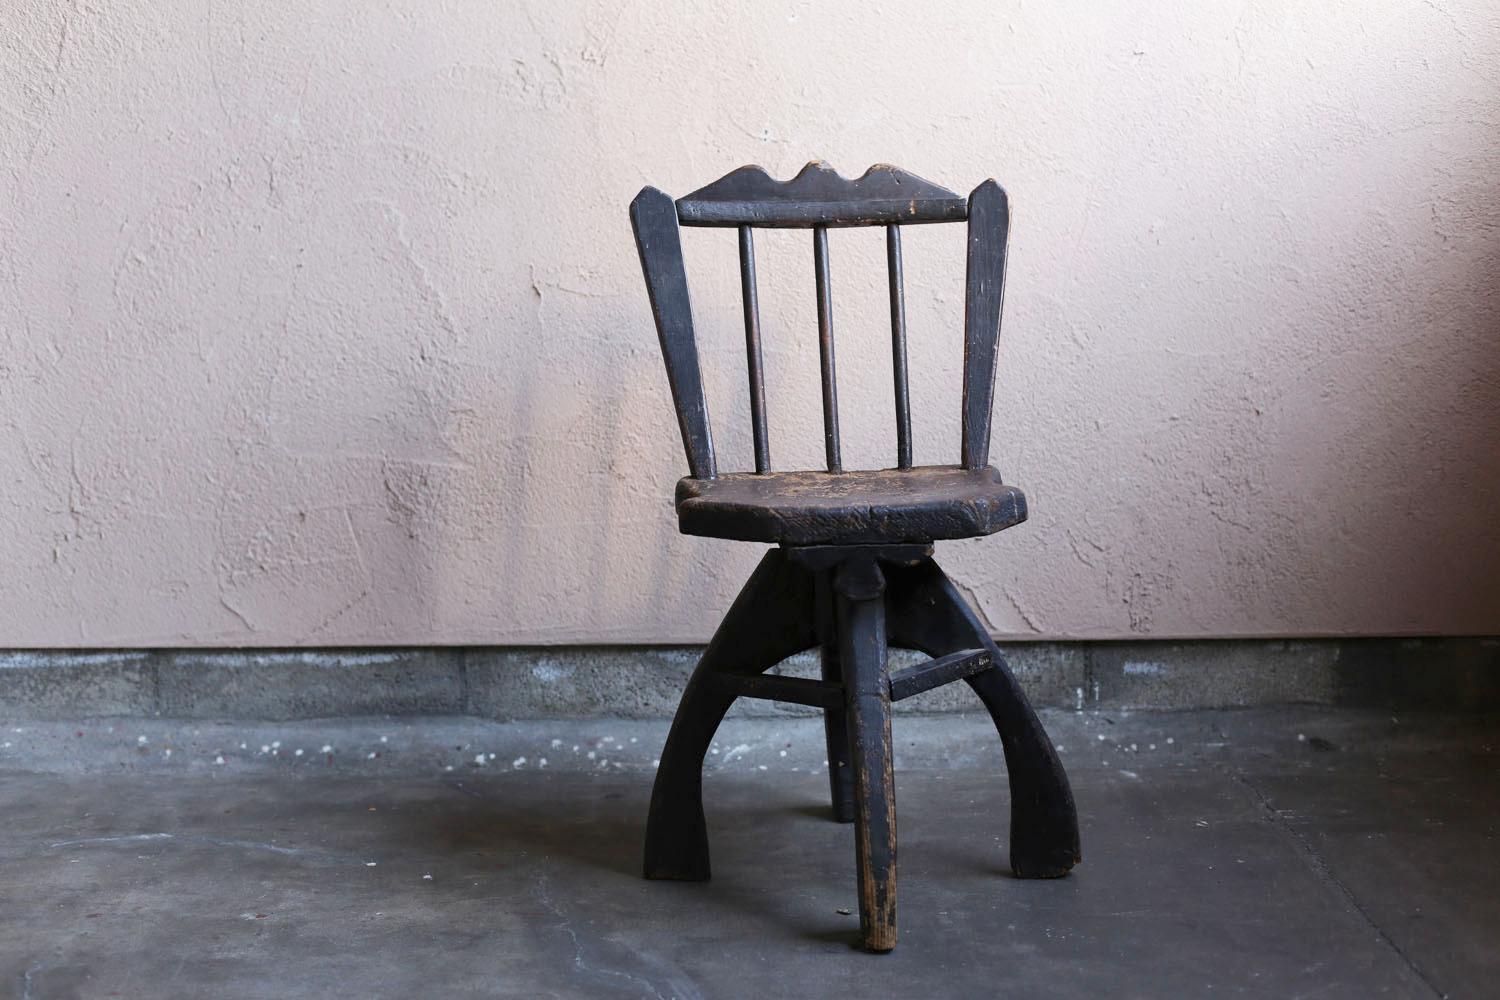 Meiji Primitive Wood Chair from Japan 1860s-1900s / Wabi Sabi Wooden Chair Mingei For Sale